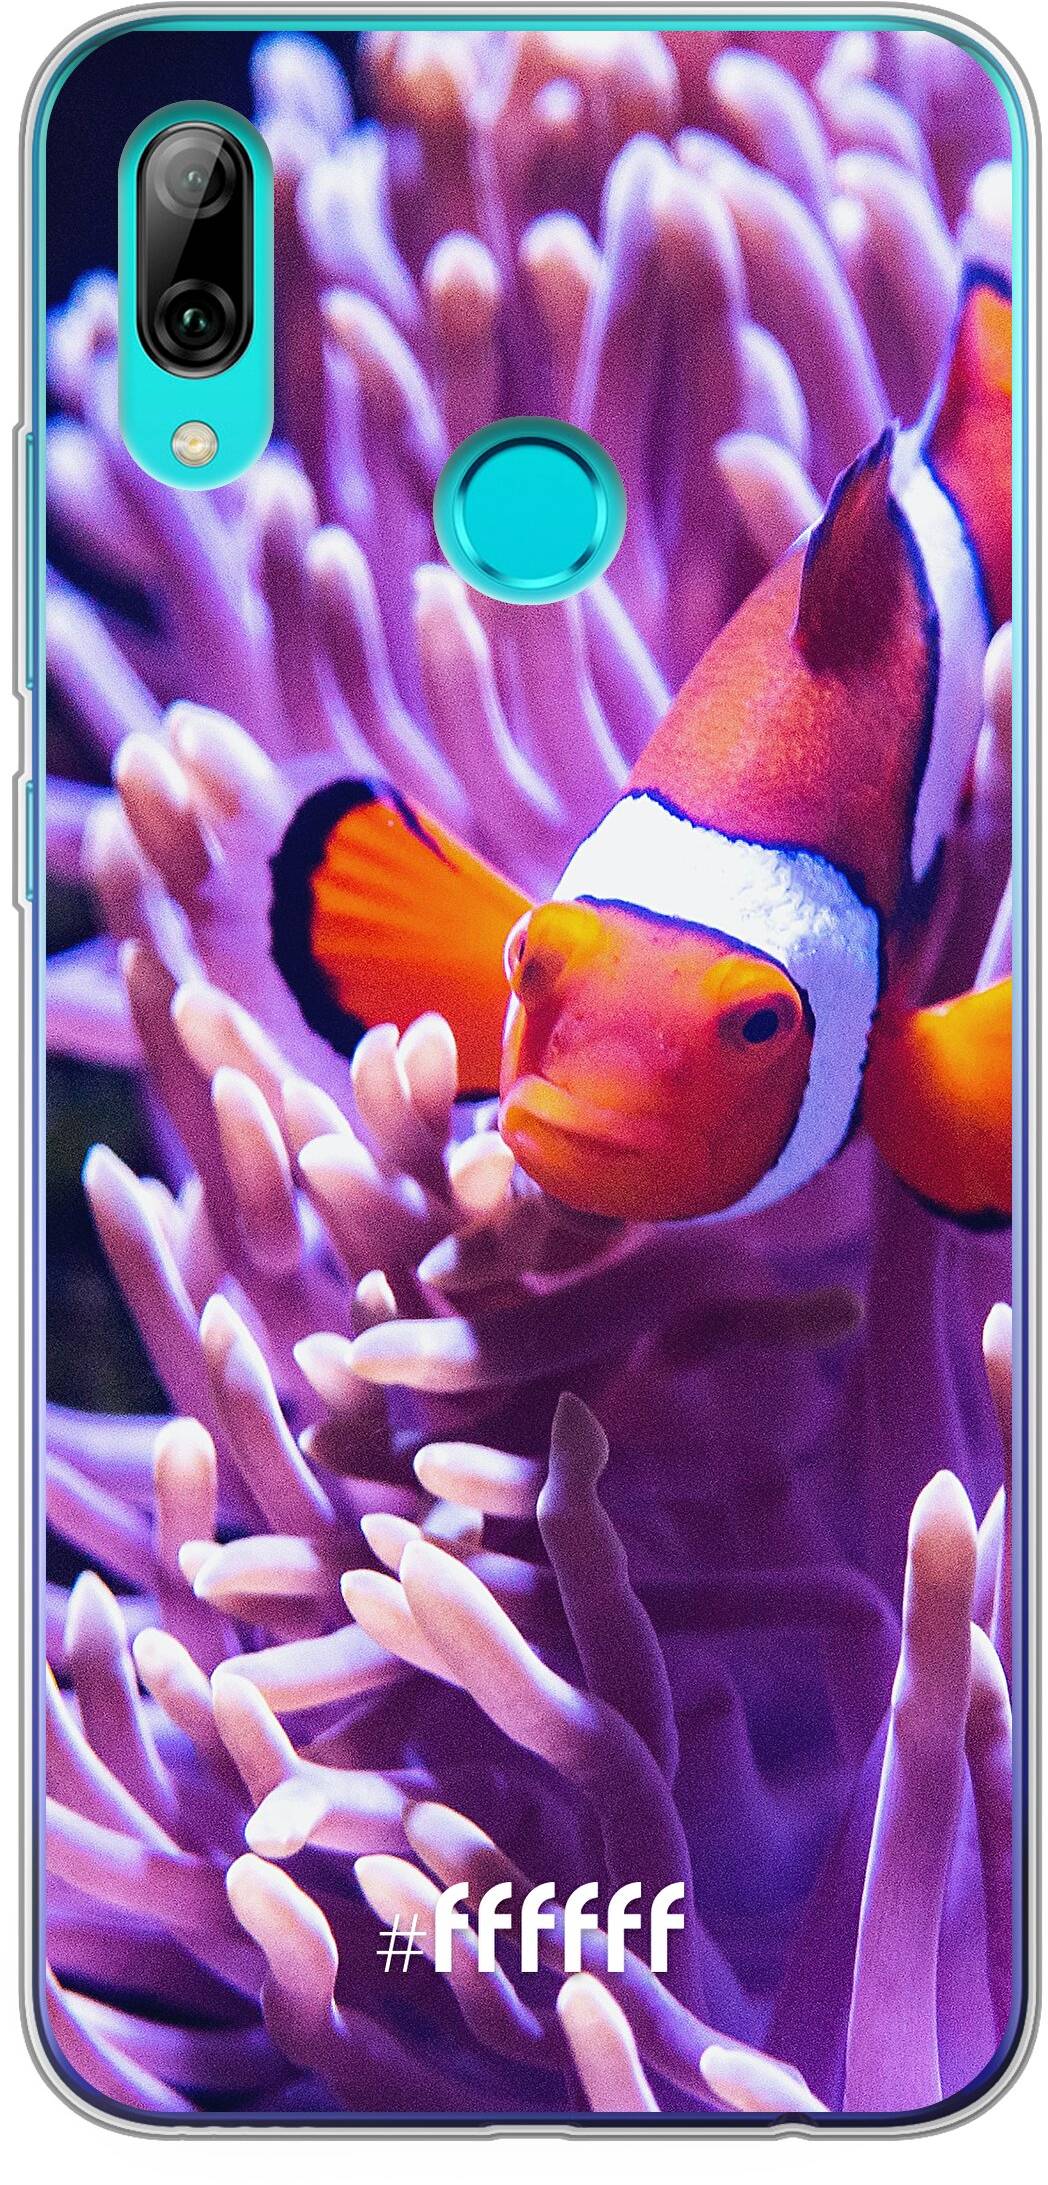 Nemo P Smart (2019)